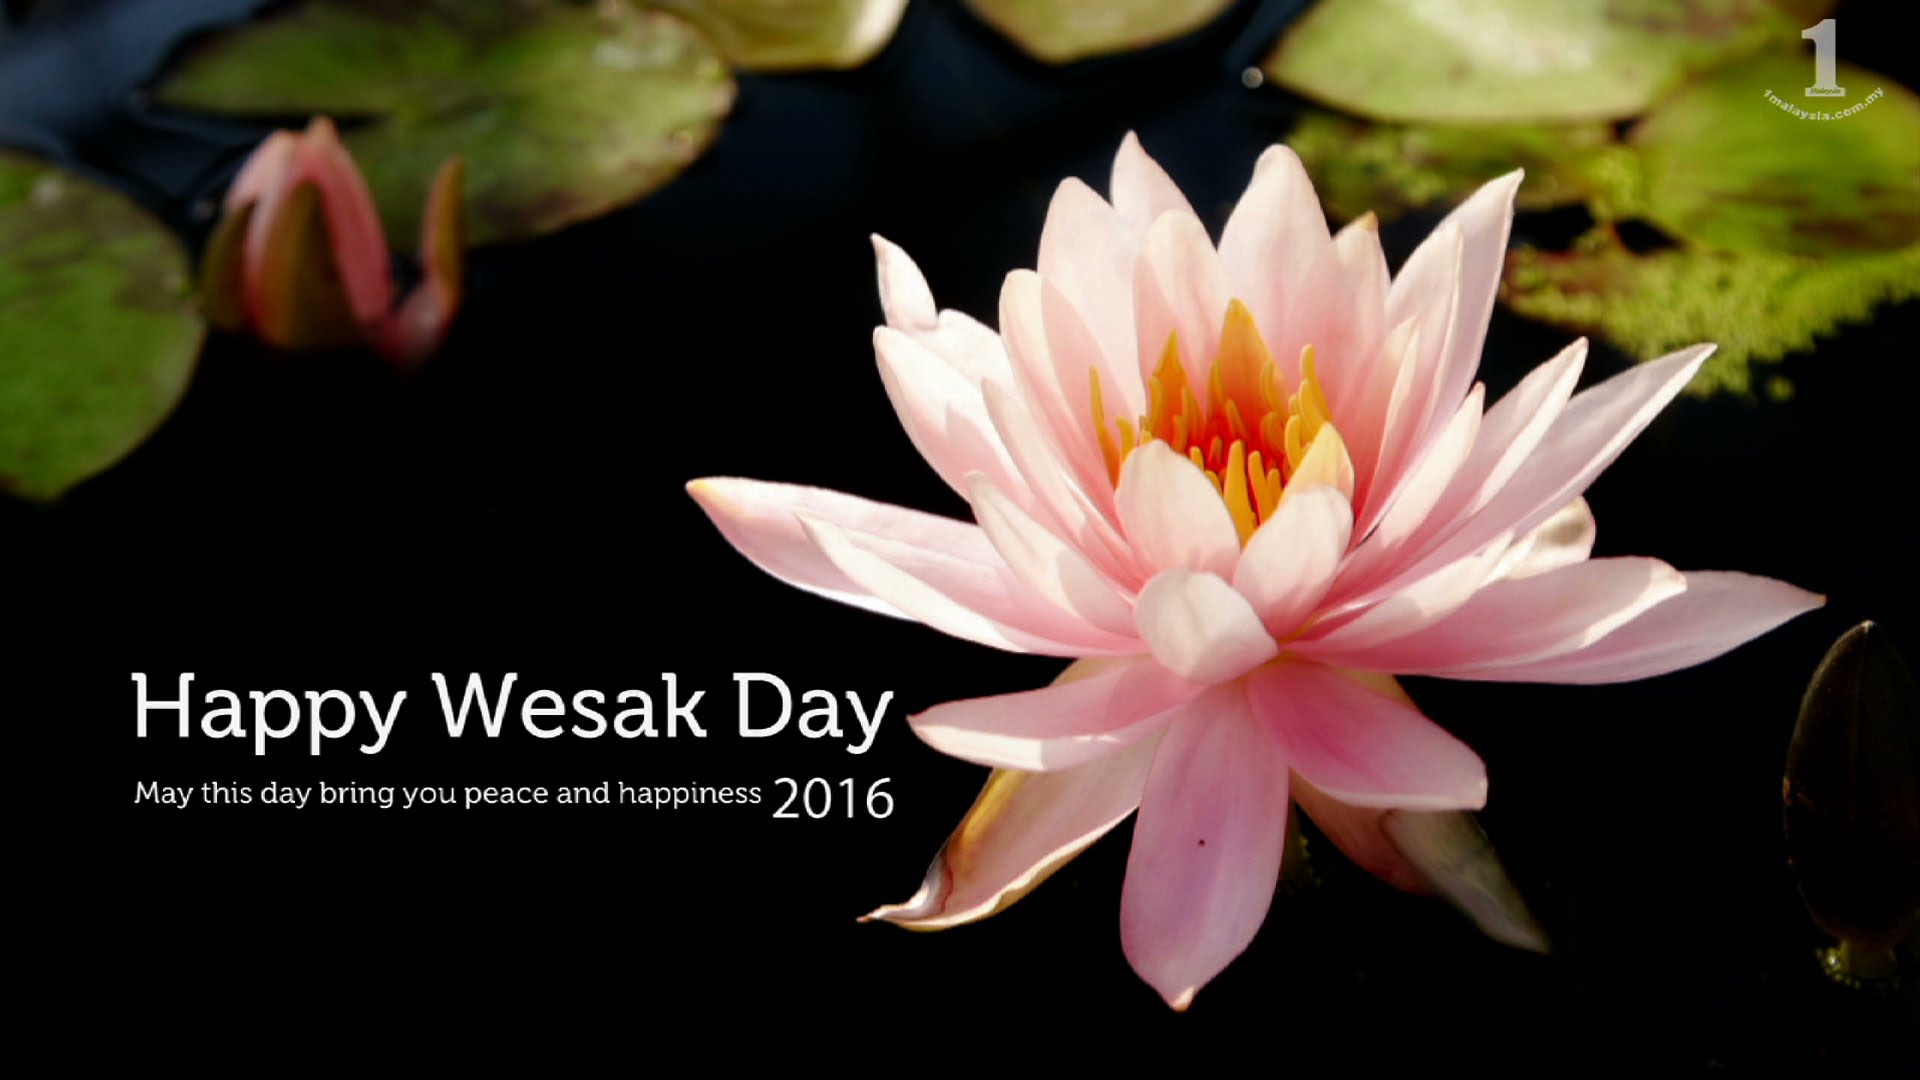 Happy Wesak Day 2016 - YouTube